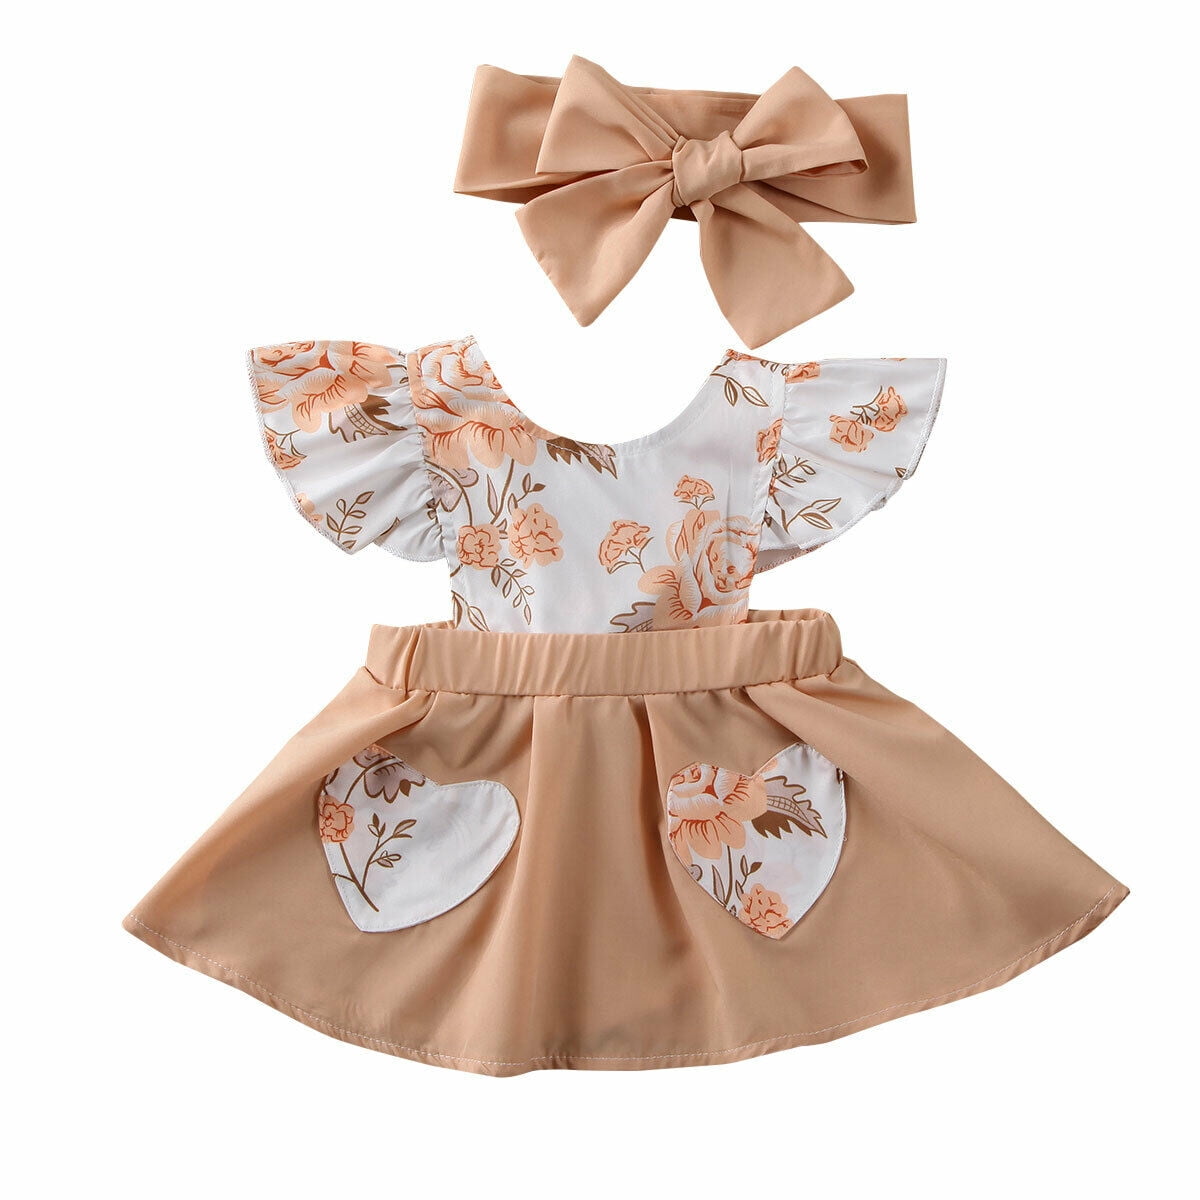 Toddler Kid Infant Baby Girls Floral Heart Princess Dresses Headband Outfits Set 